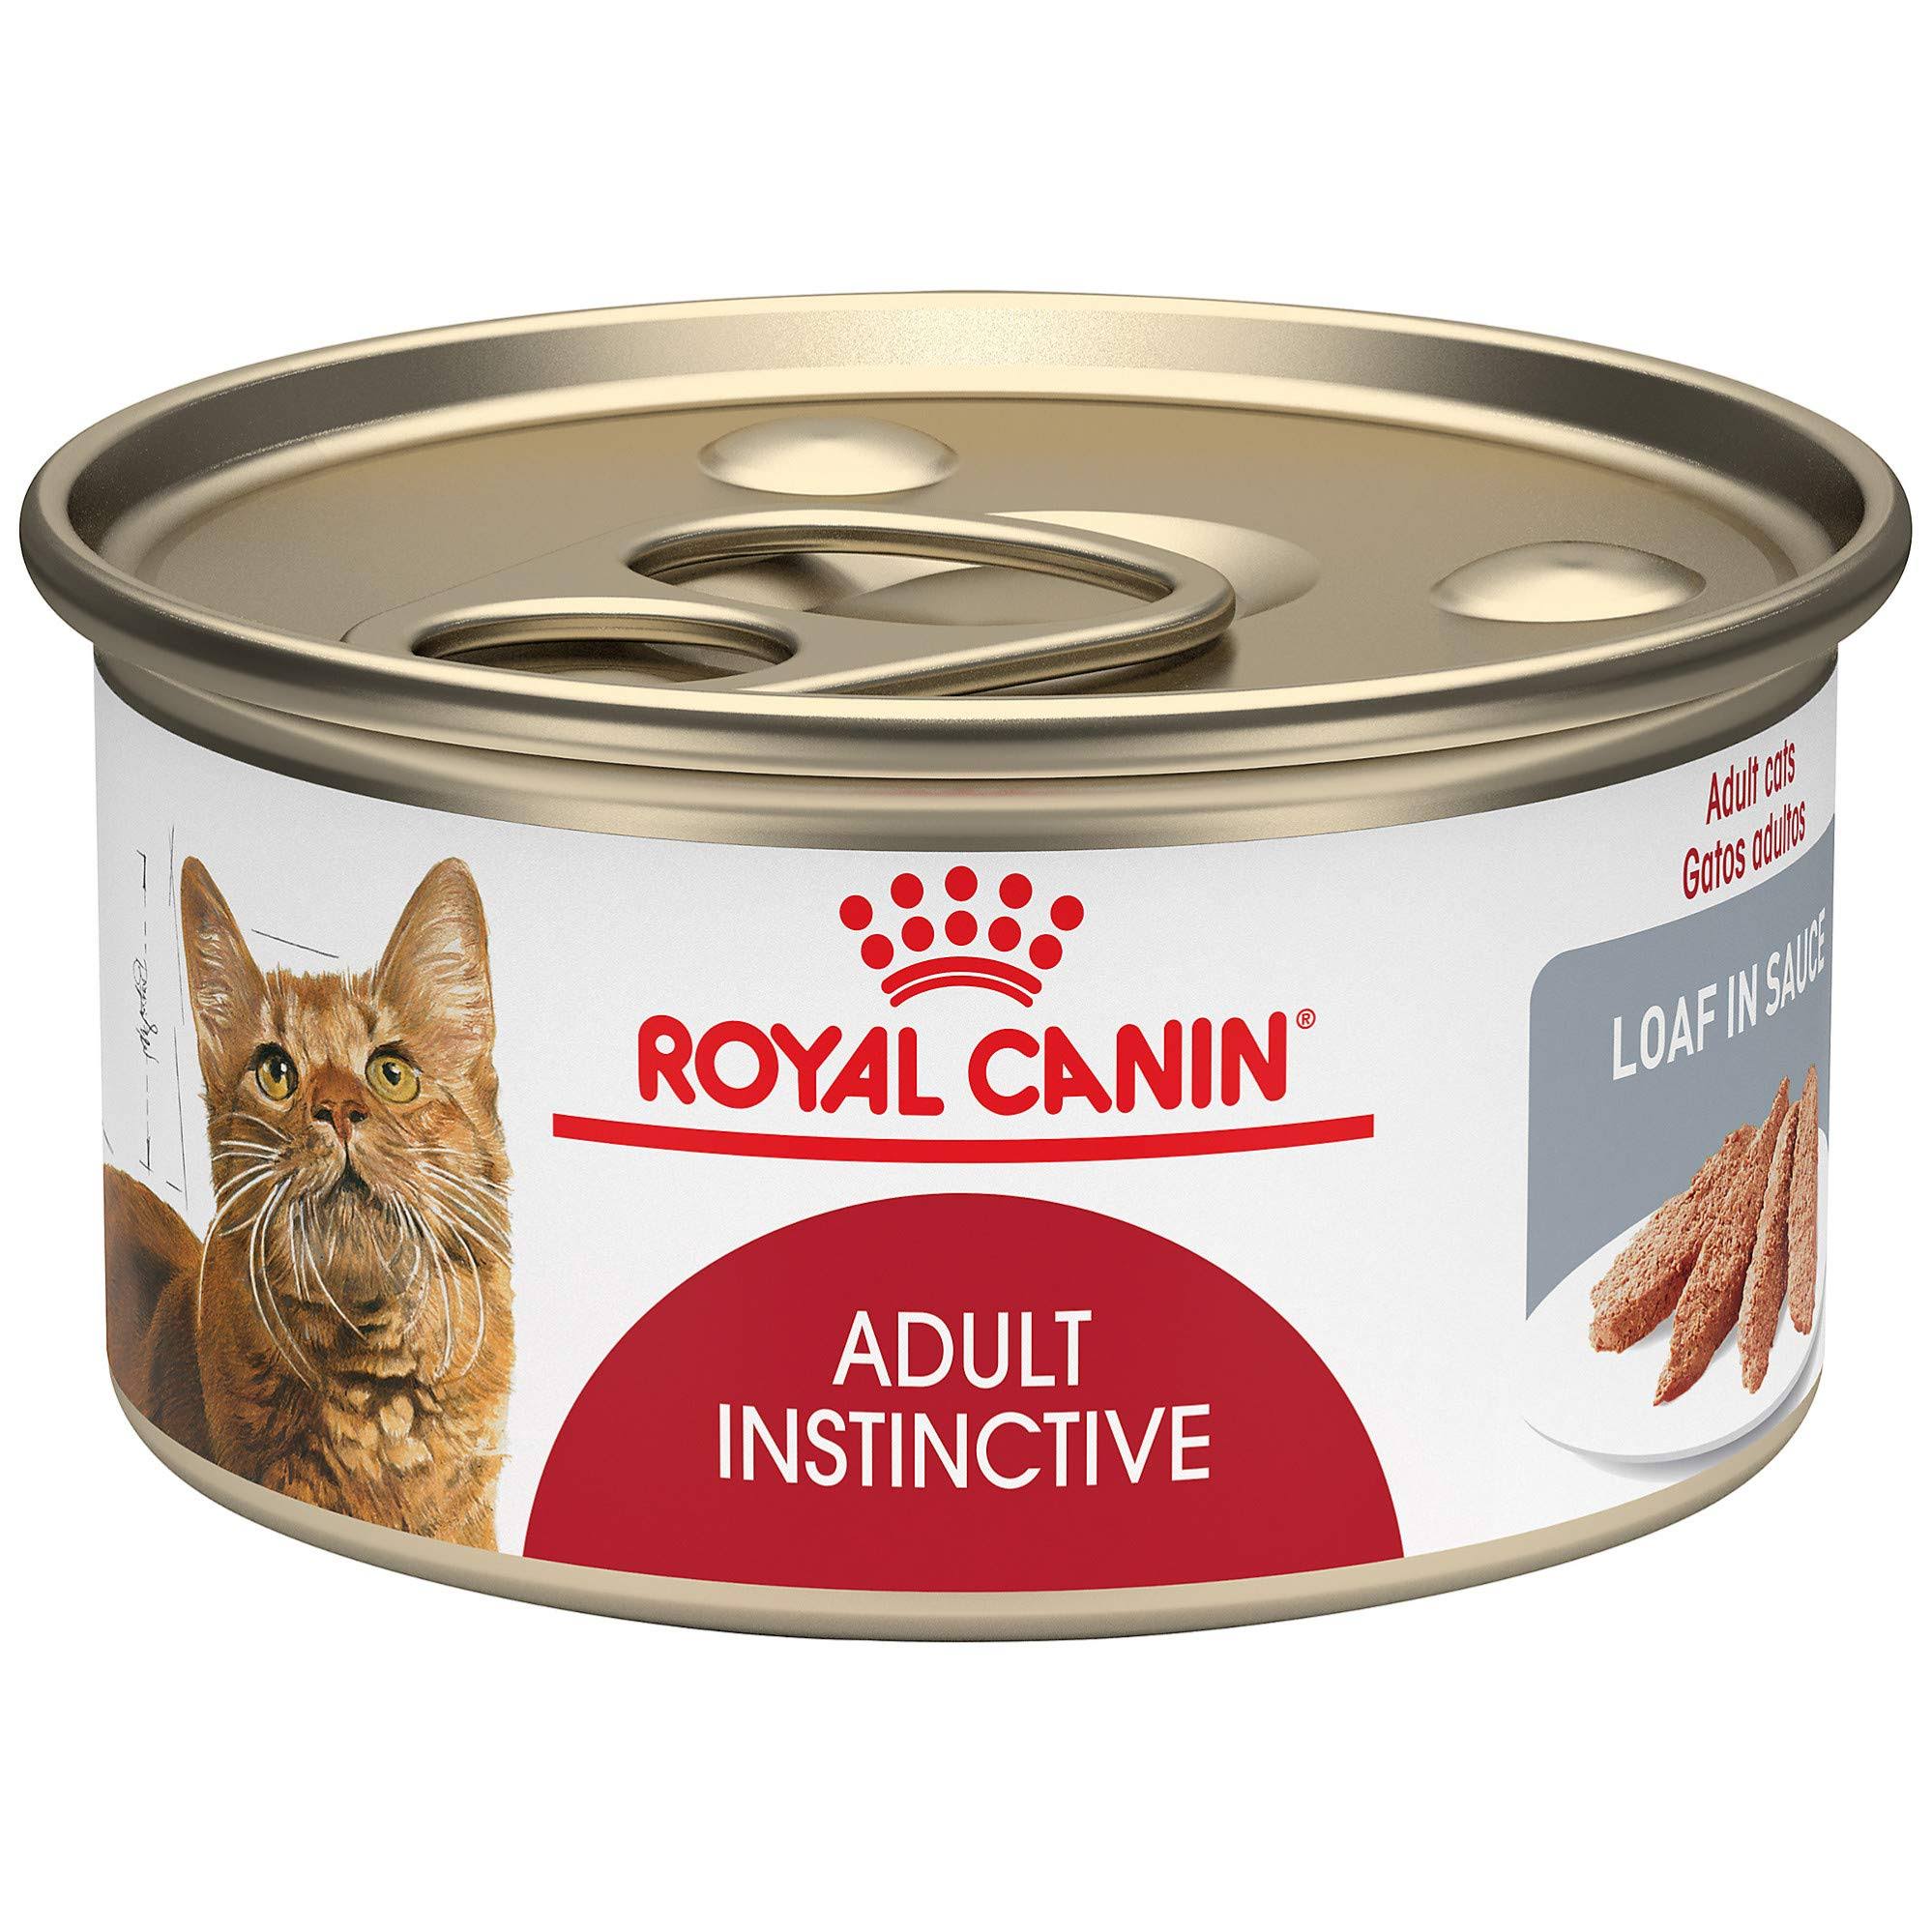 Royal Canin Feline Health Nutrition Cat Food - 85g, Loaf In Sauce